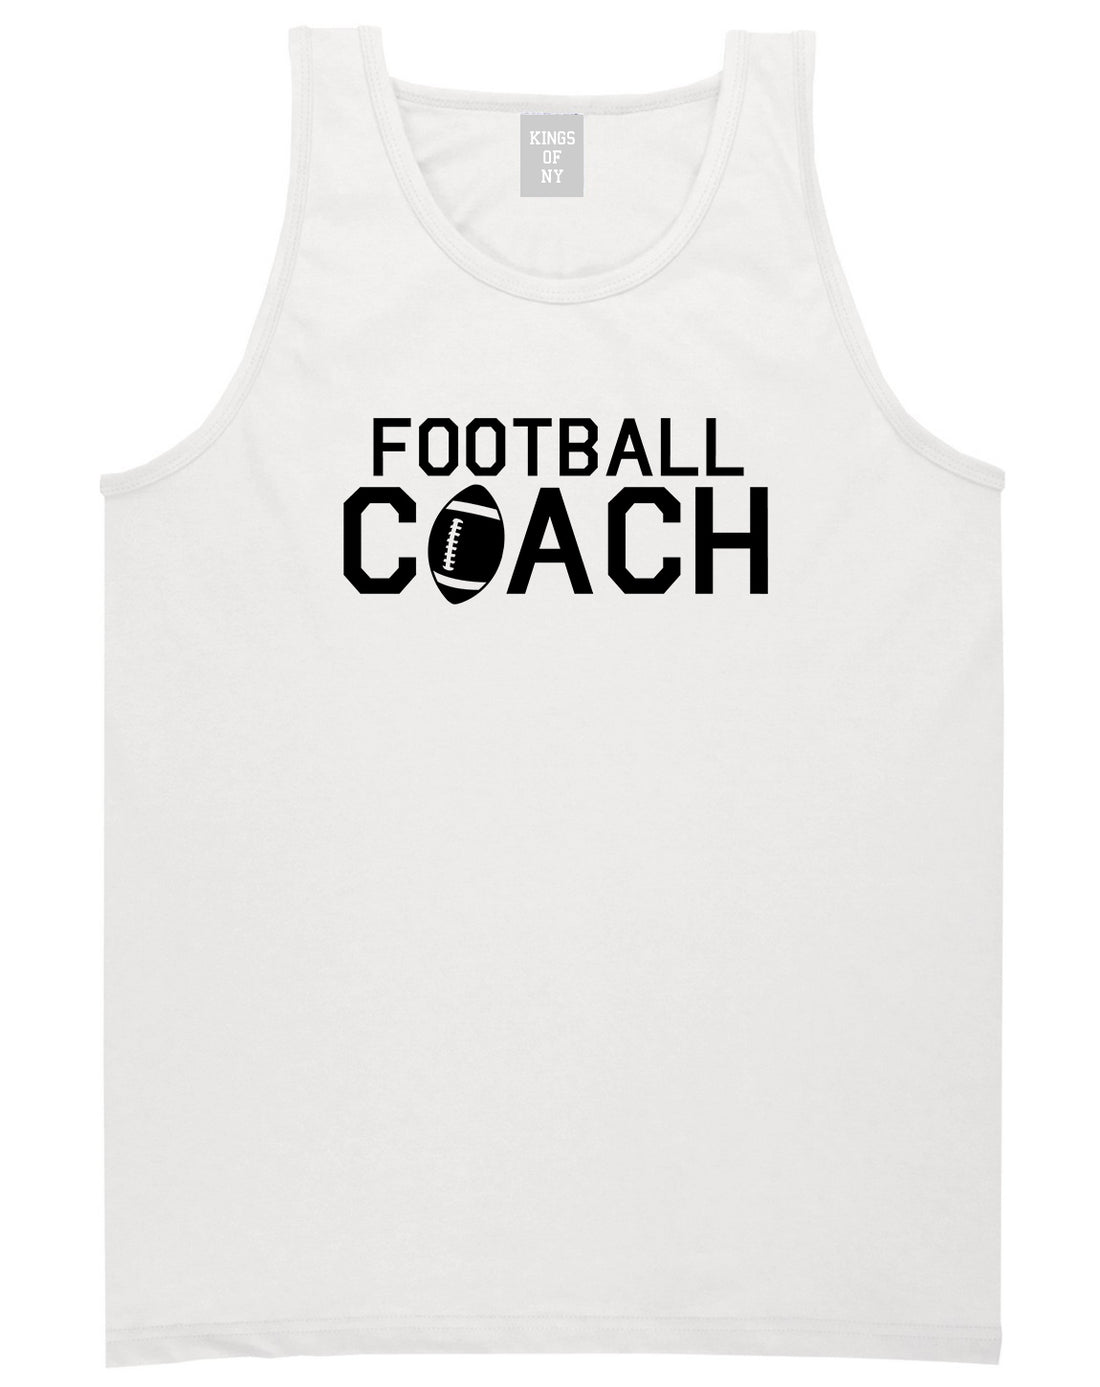 Football Coach Sports Mens White Tank Top Shirt by KINGS OF NY